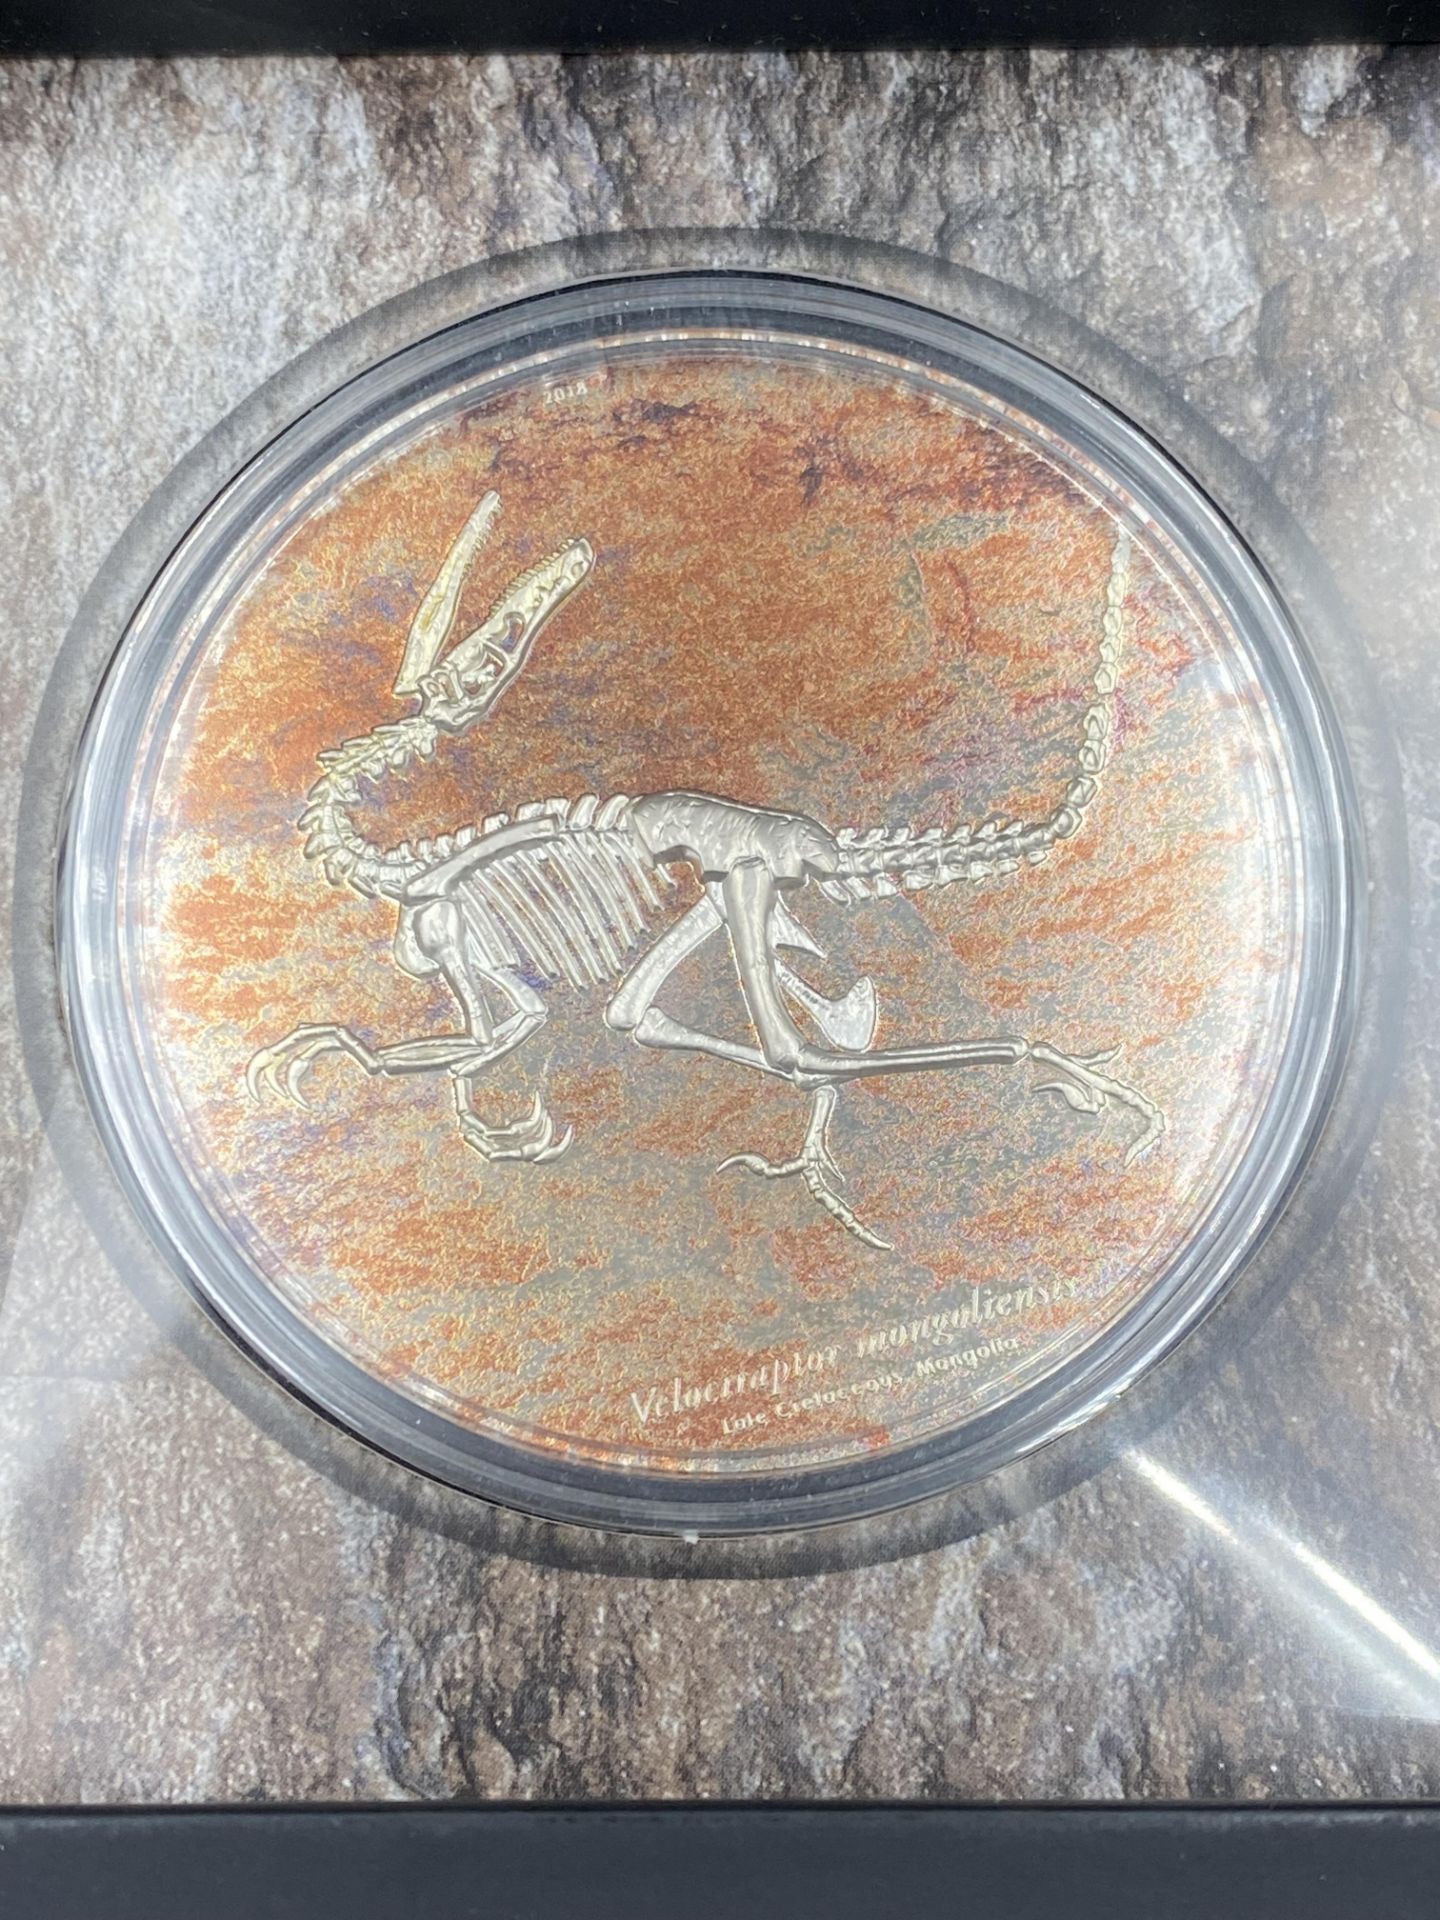 Smart Minting Mongol Bank Prehistoric Beasts 2000 togrog 3oz silver coin - Image 3 of 4